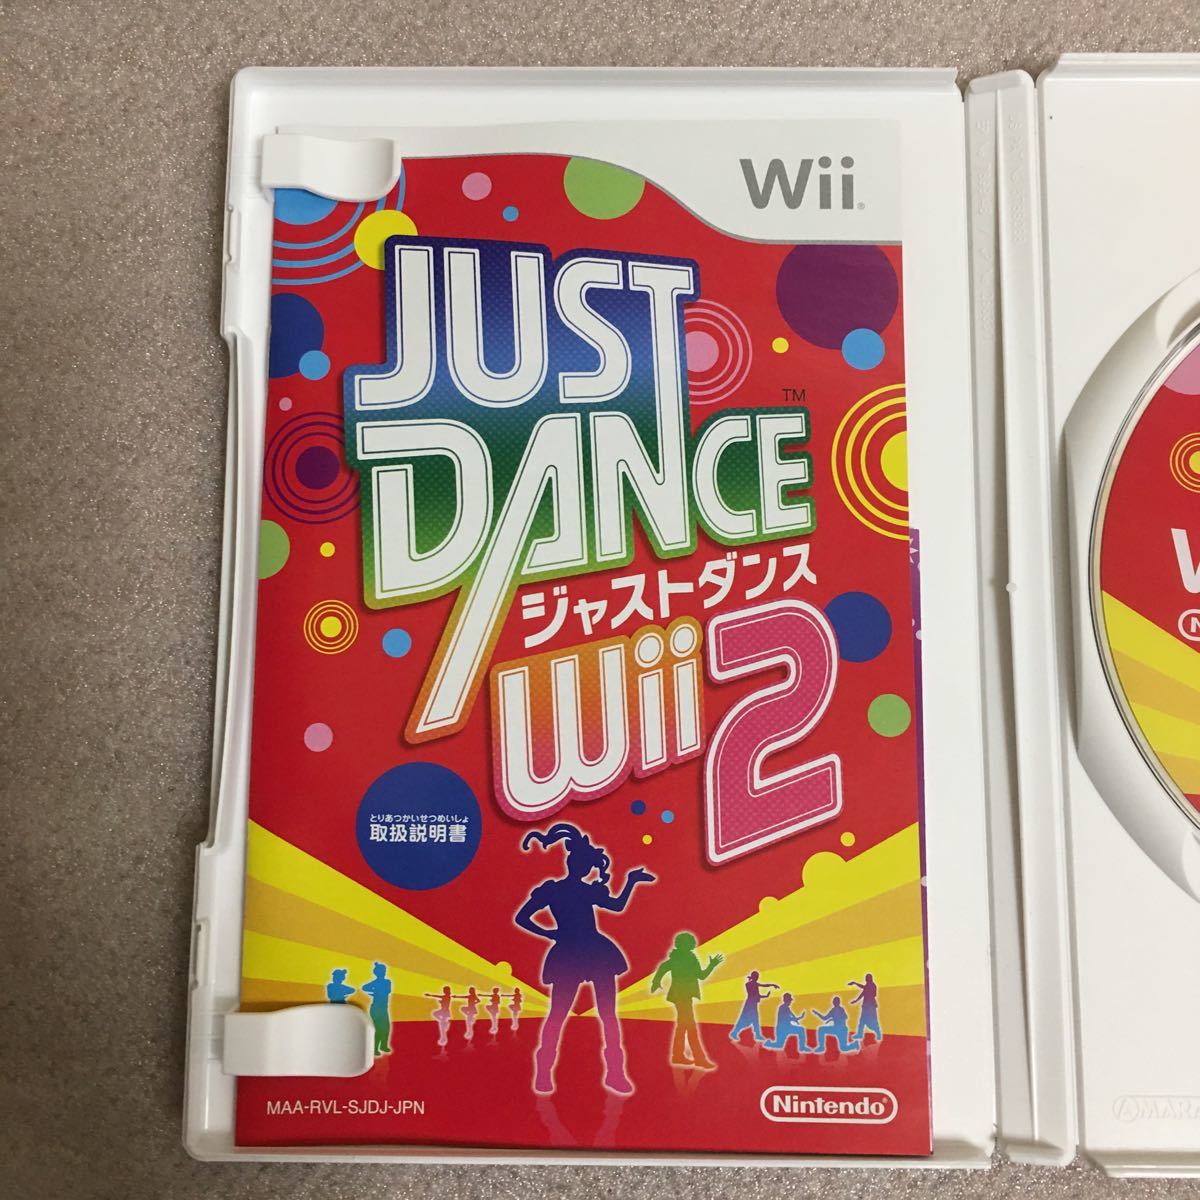  【Wii】 JUST DANCE Wii 2 ジャストダンス